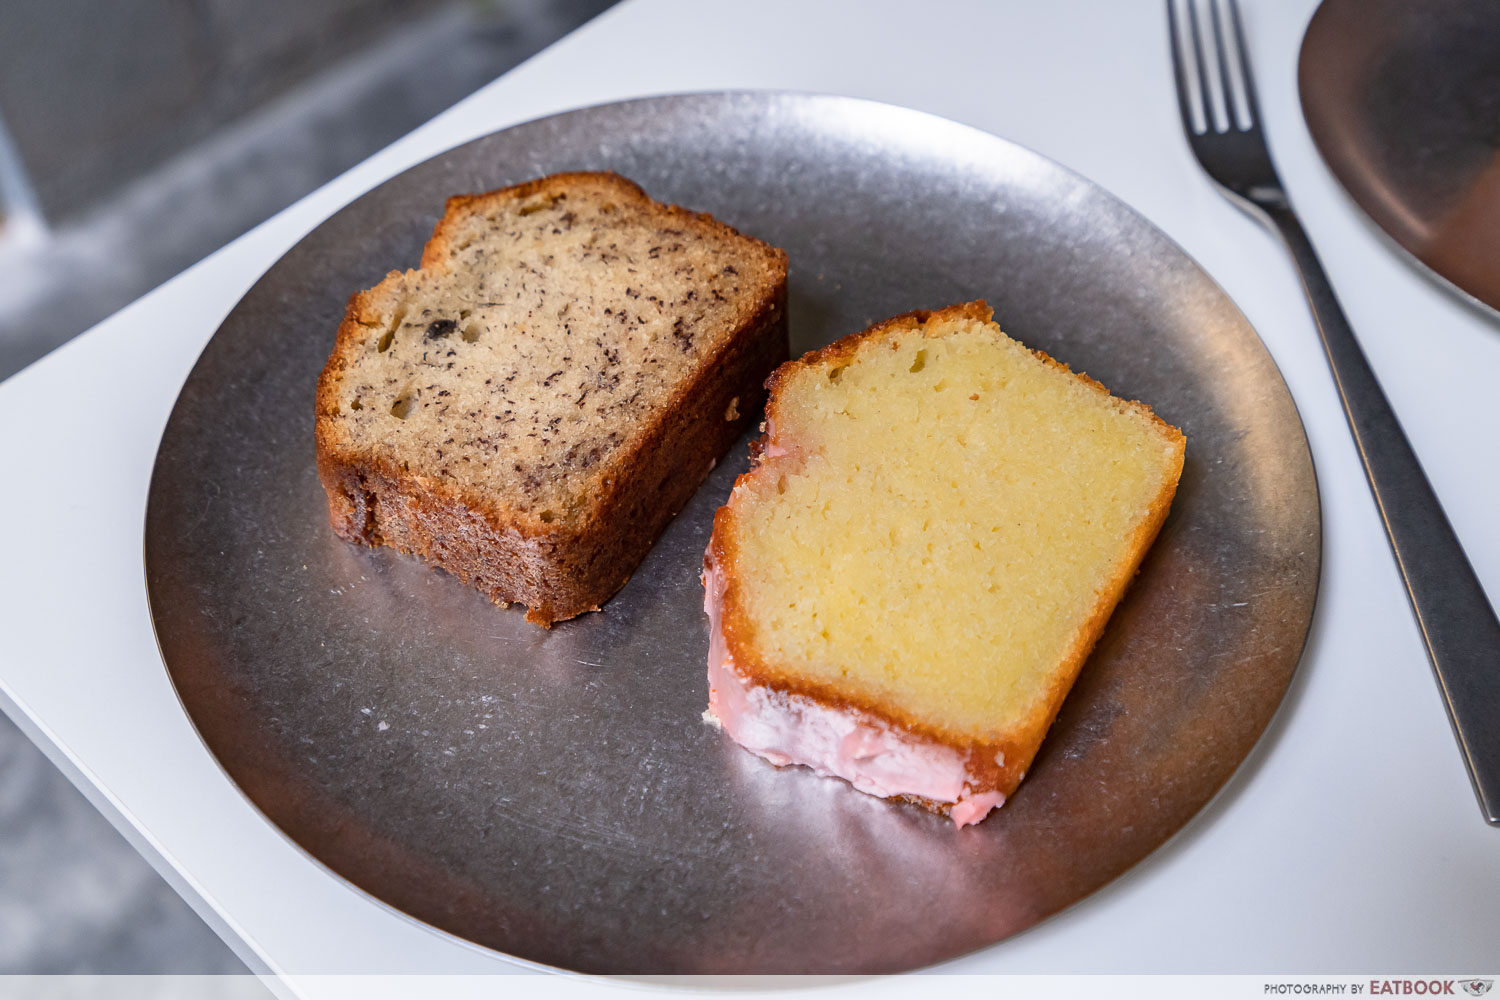 Cloud Cafe - Banana Bread and Strawberry Lemon Cake